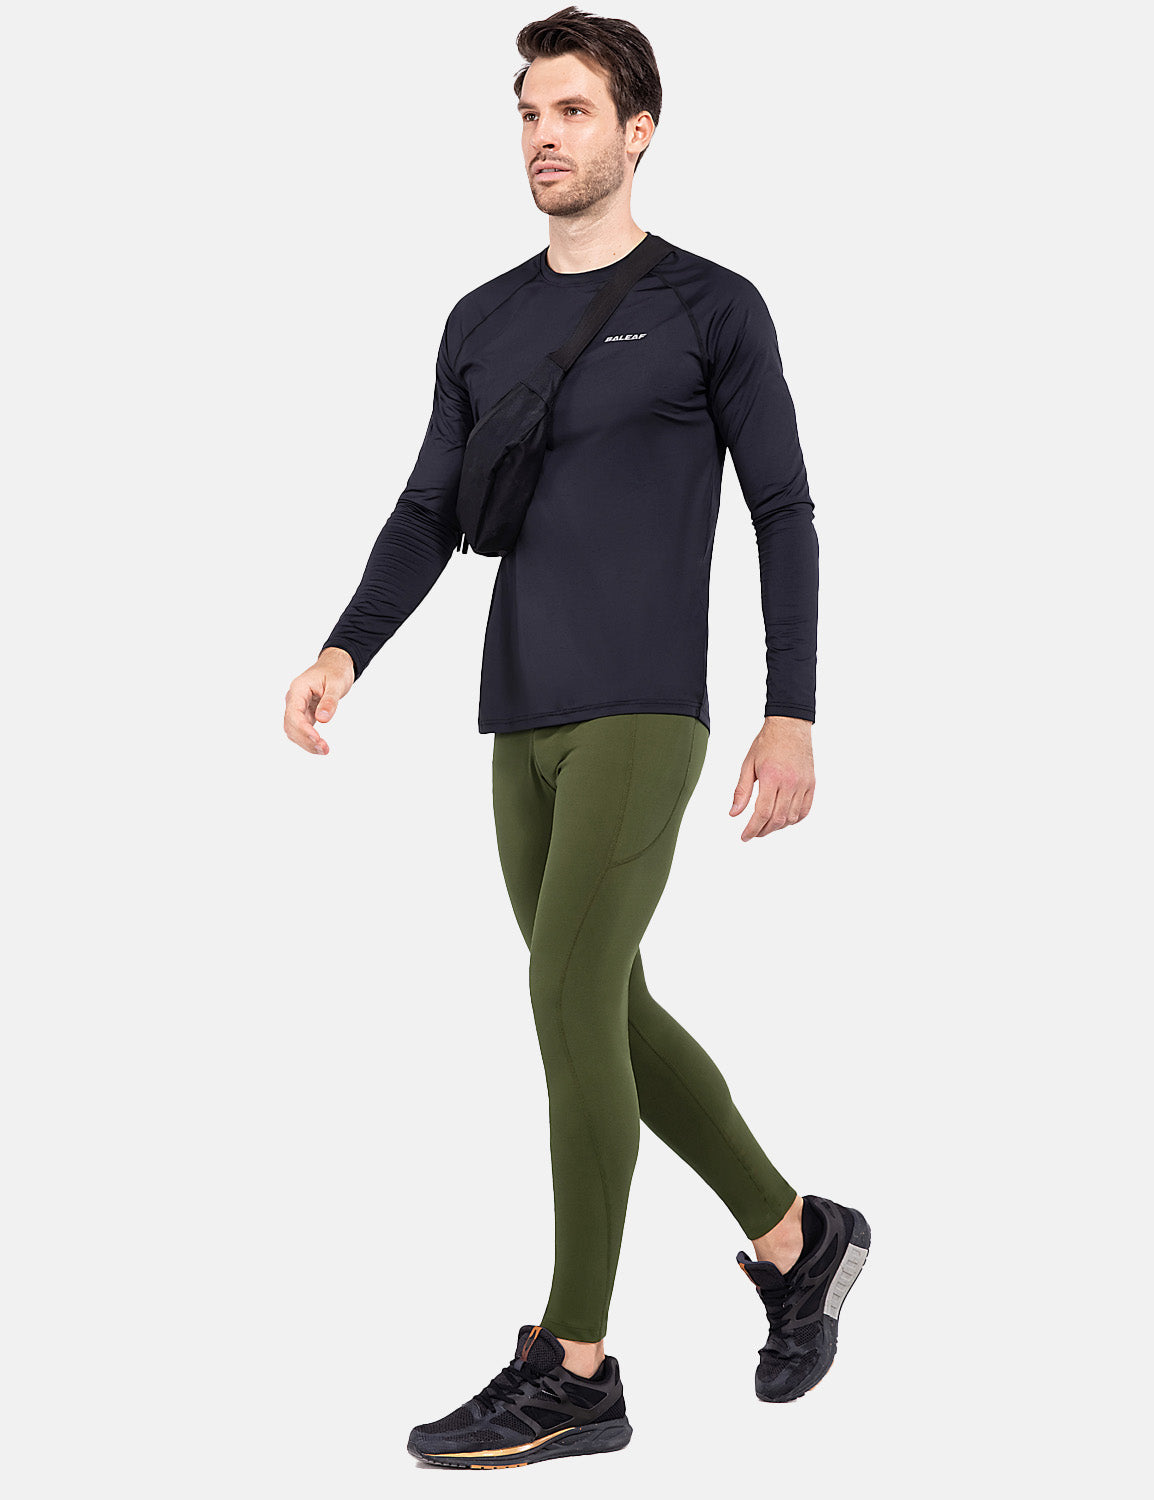 Baleaf Men's Fleece Lined Yoga Tight Pants cbh044 Green Full